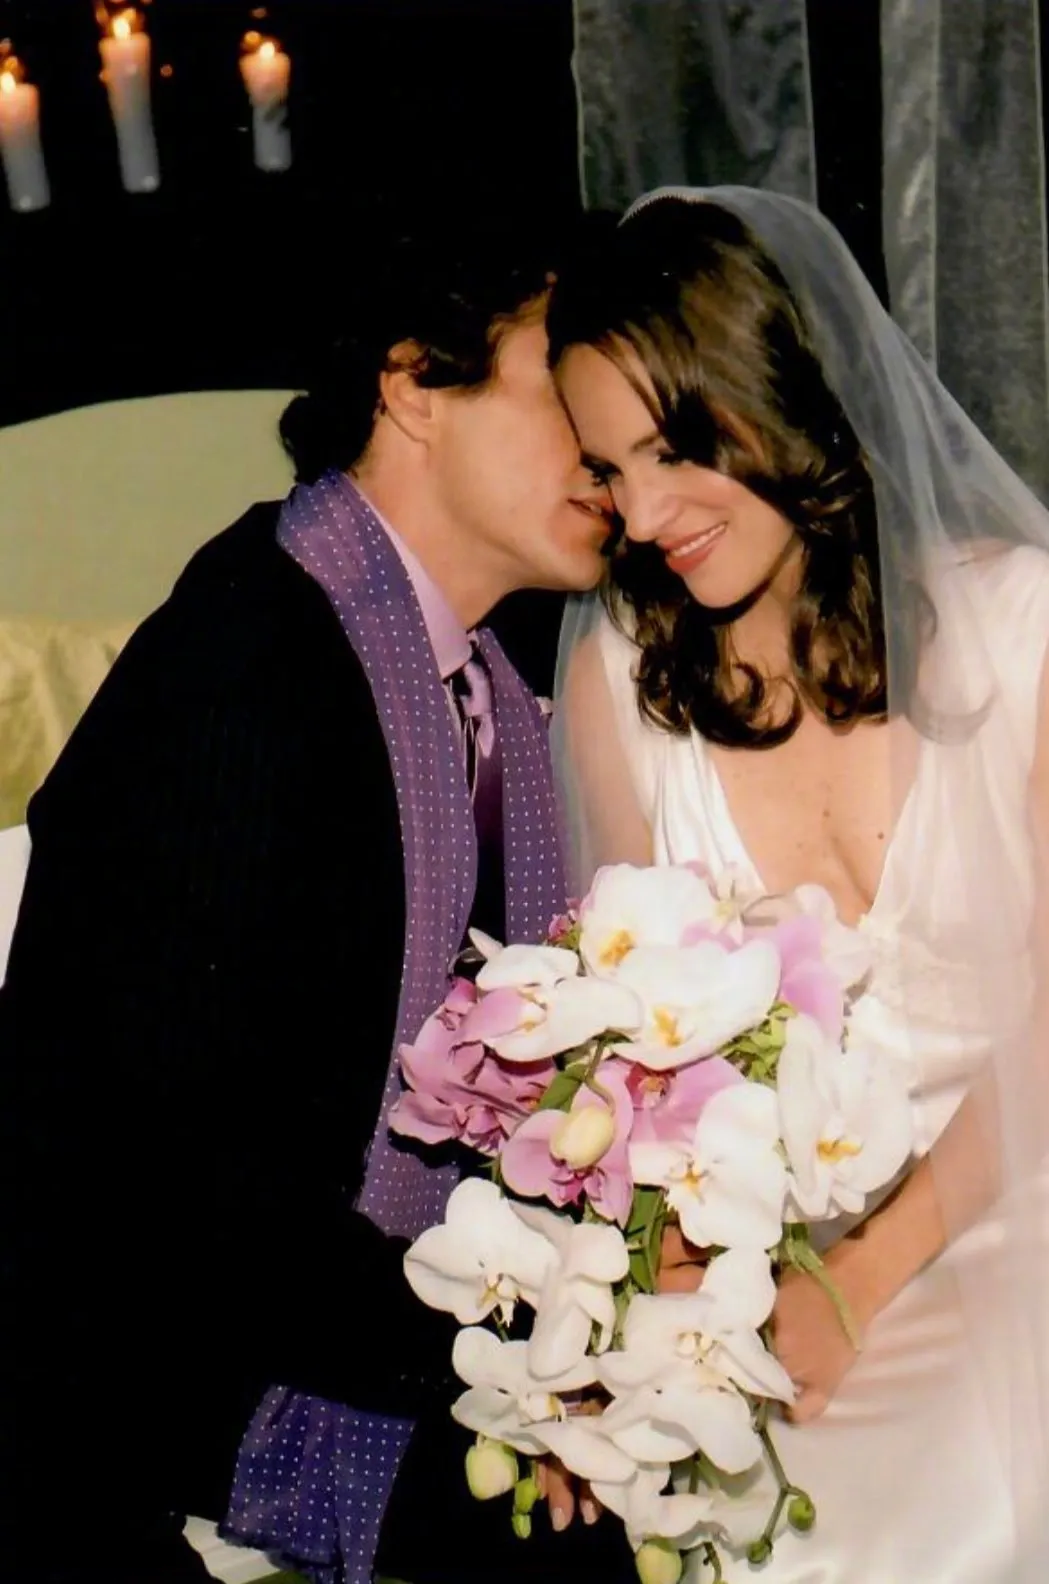 Robert Downey Jr. celebrates 17th wedding anniversary to wife Susan Downey | FMV6